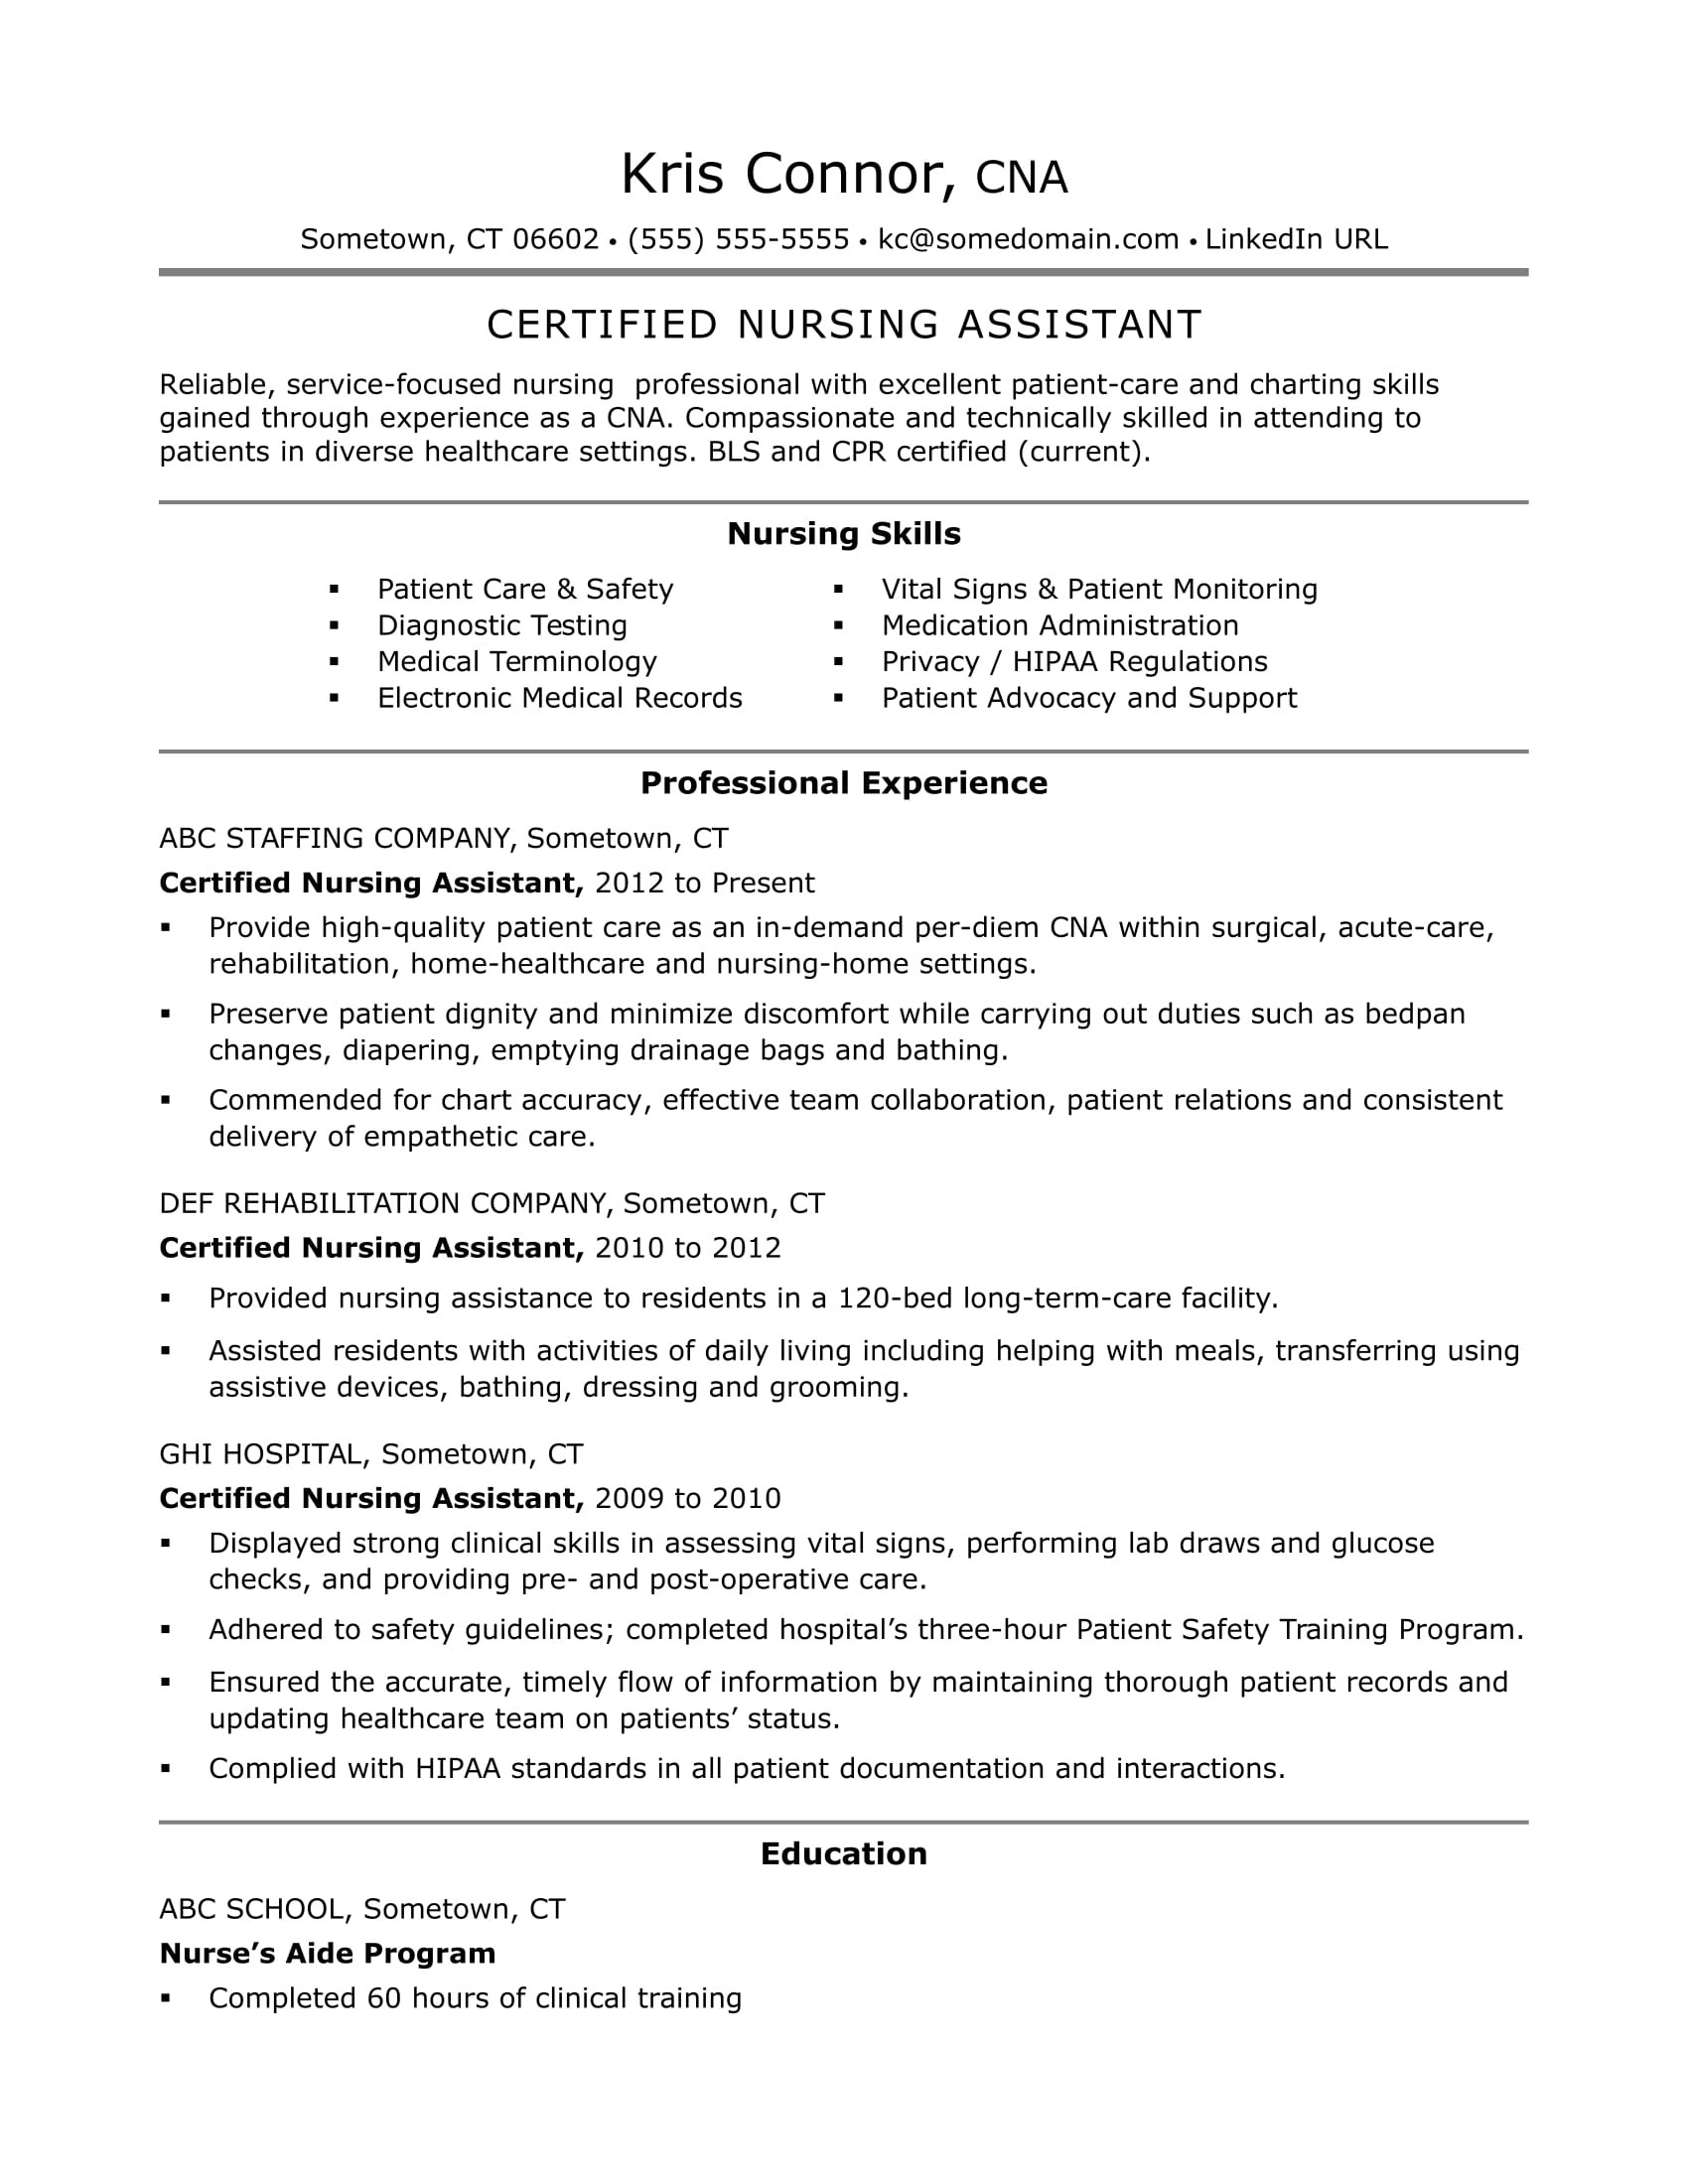 Sample Resume Showing You Have Prior Telephone Skills Cna Resume Examples: Skills for Cnas Monster.com